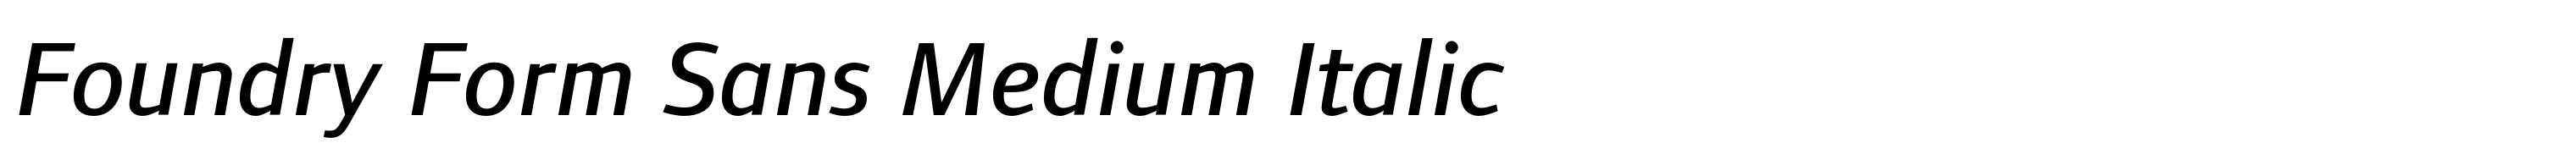 Foundry Form Sans Medium Italic